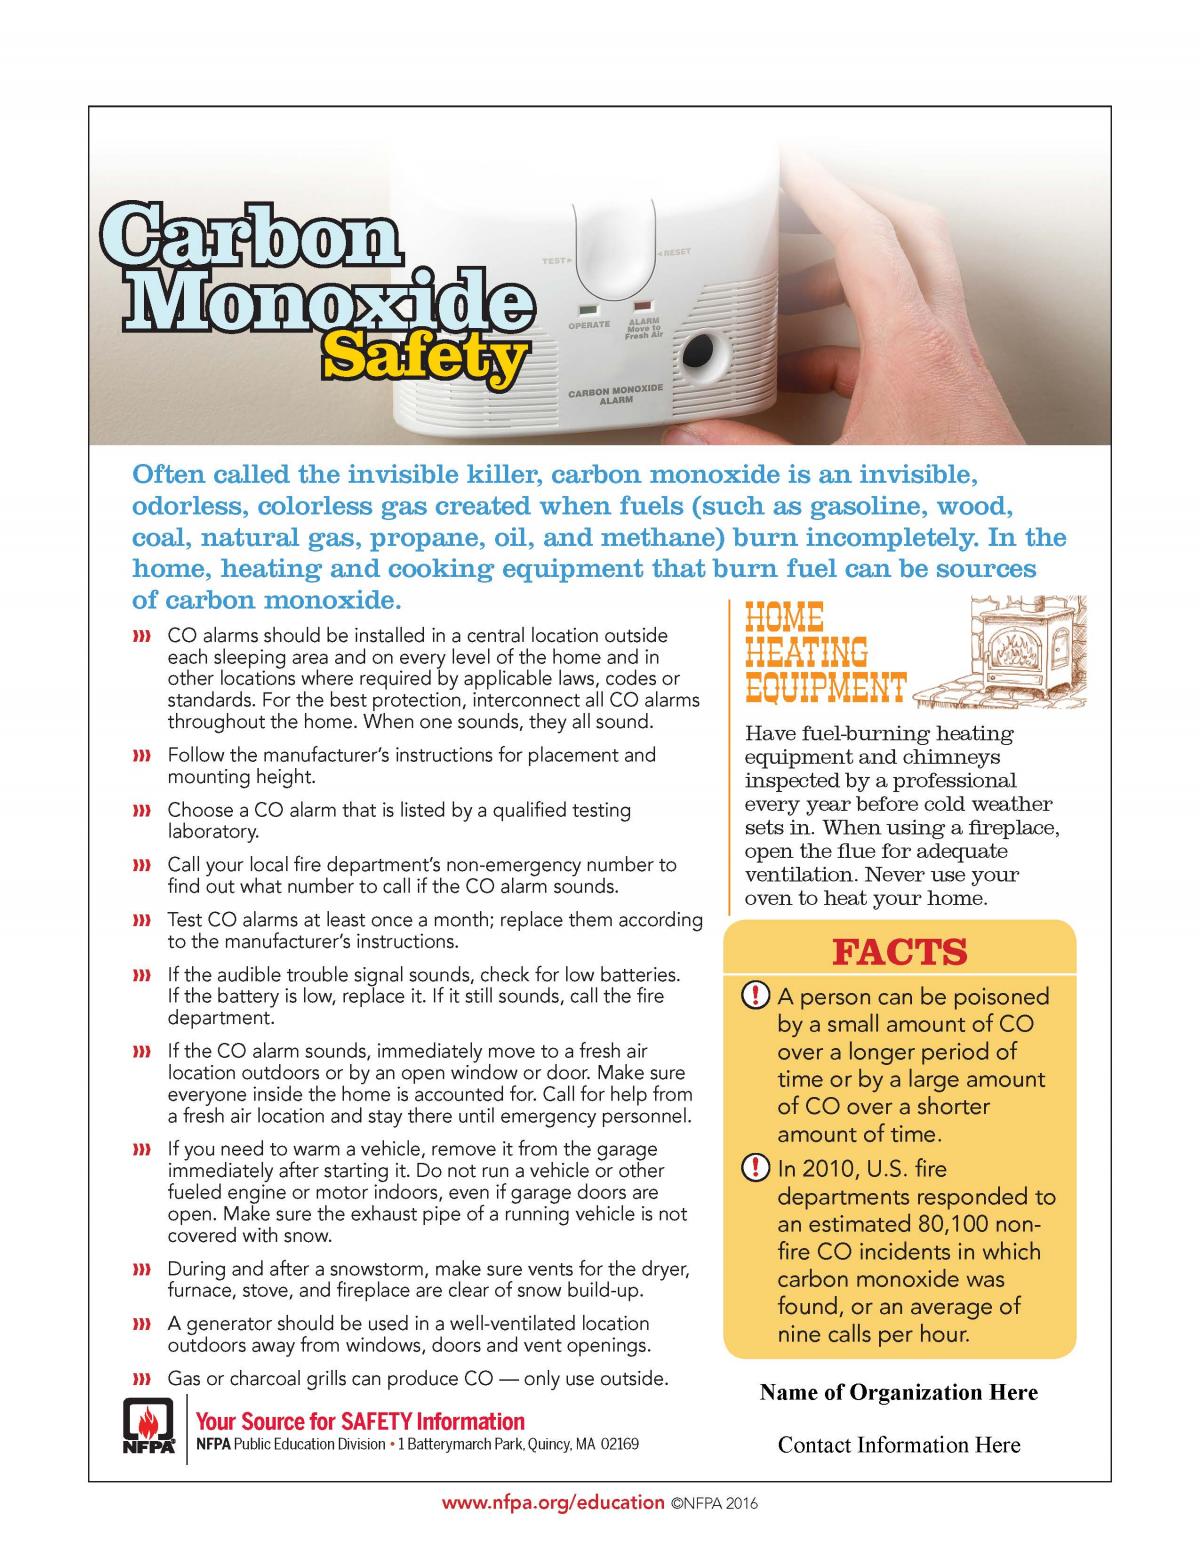 Safety Tips for Carbon Monoxide